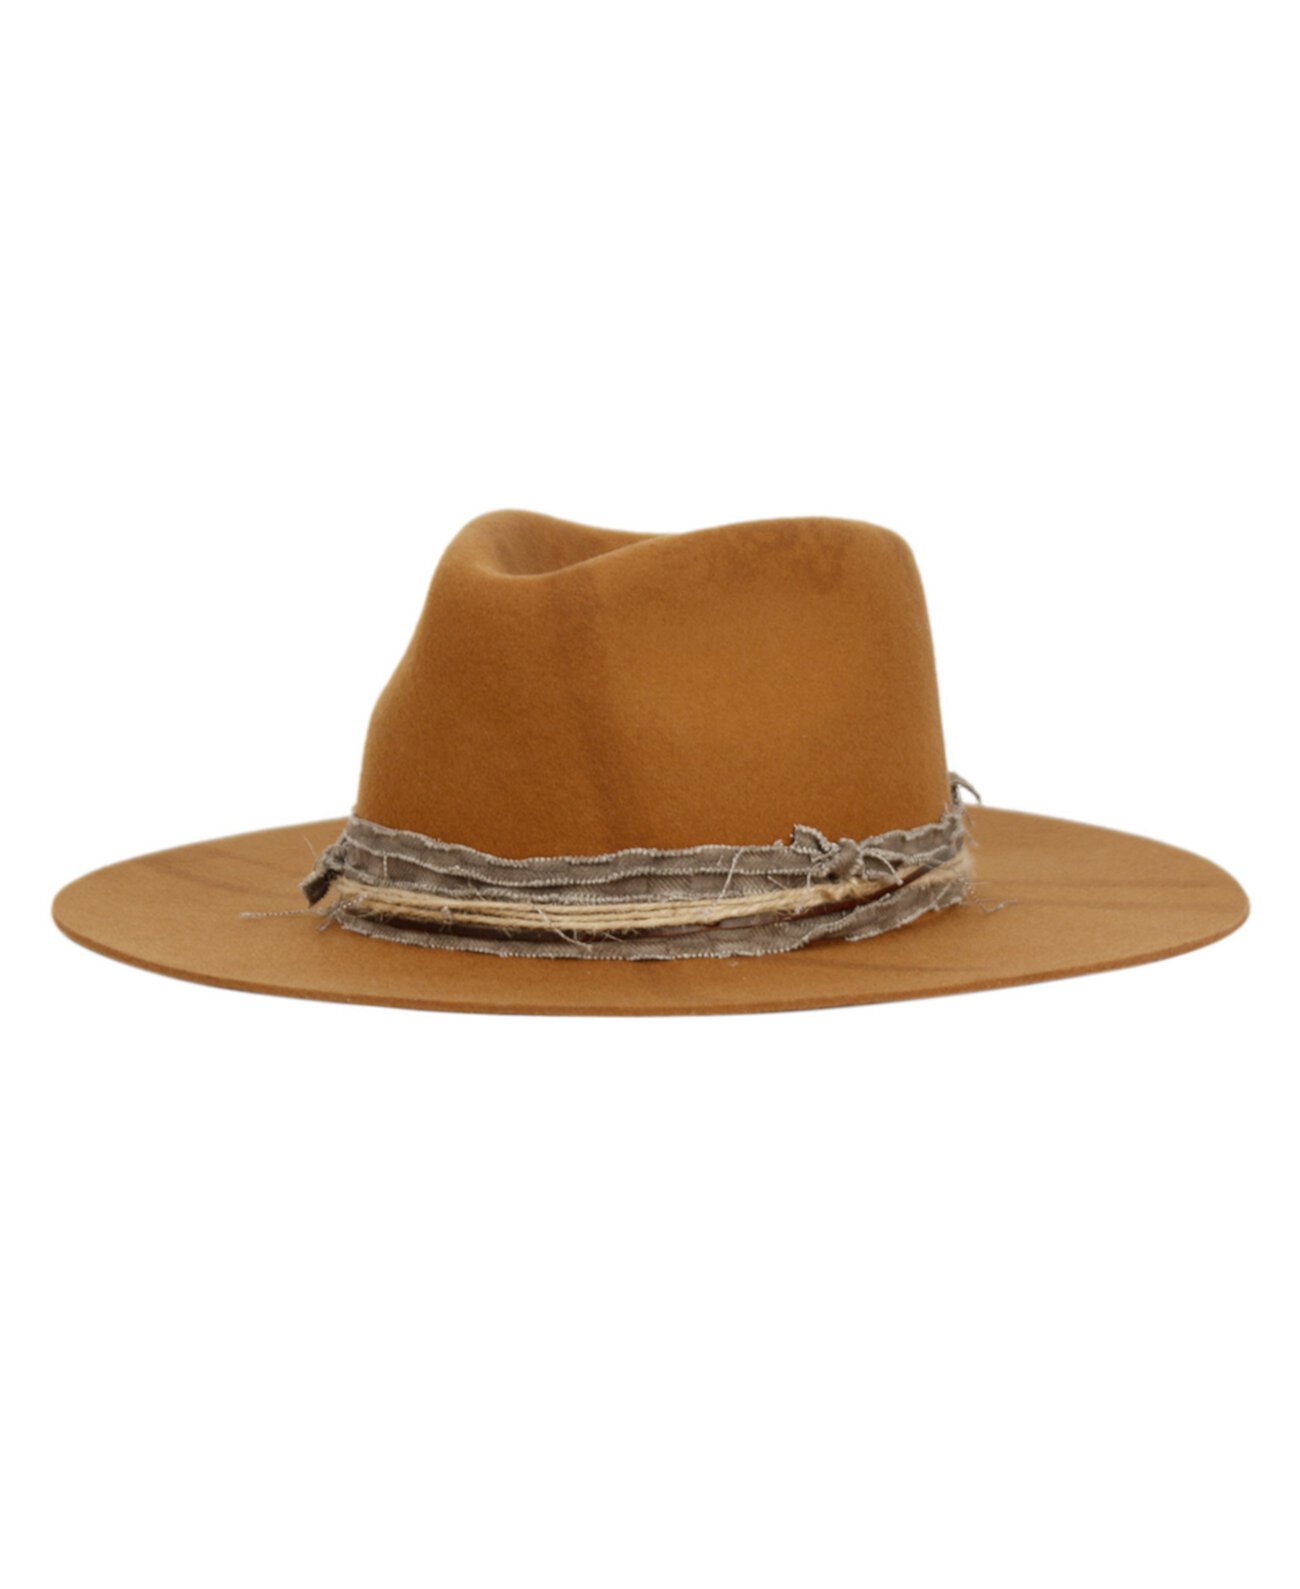 Vintage-Like Felt Fedora Ranch Hat Angela & William